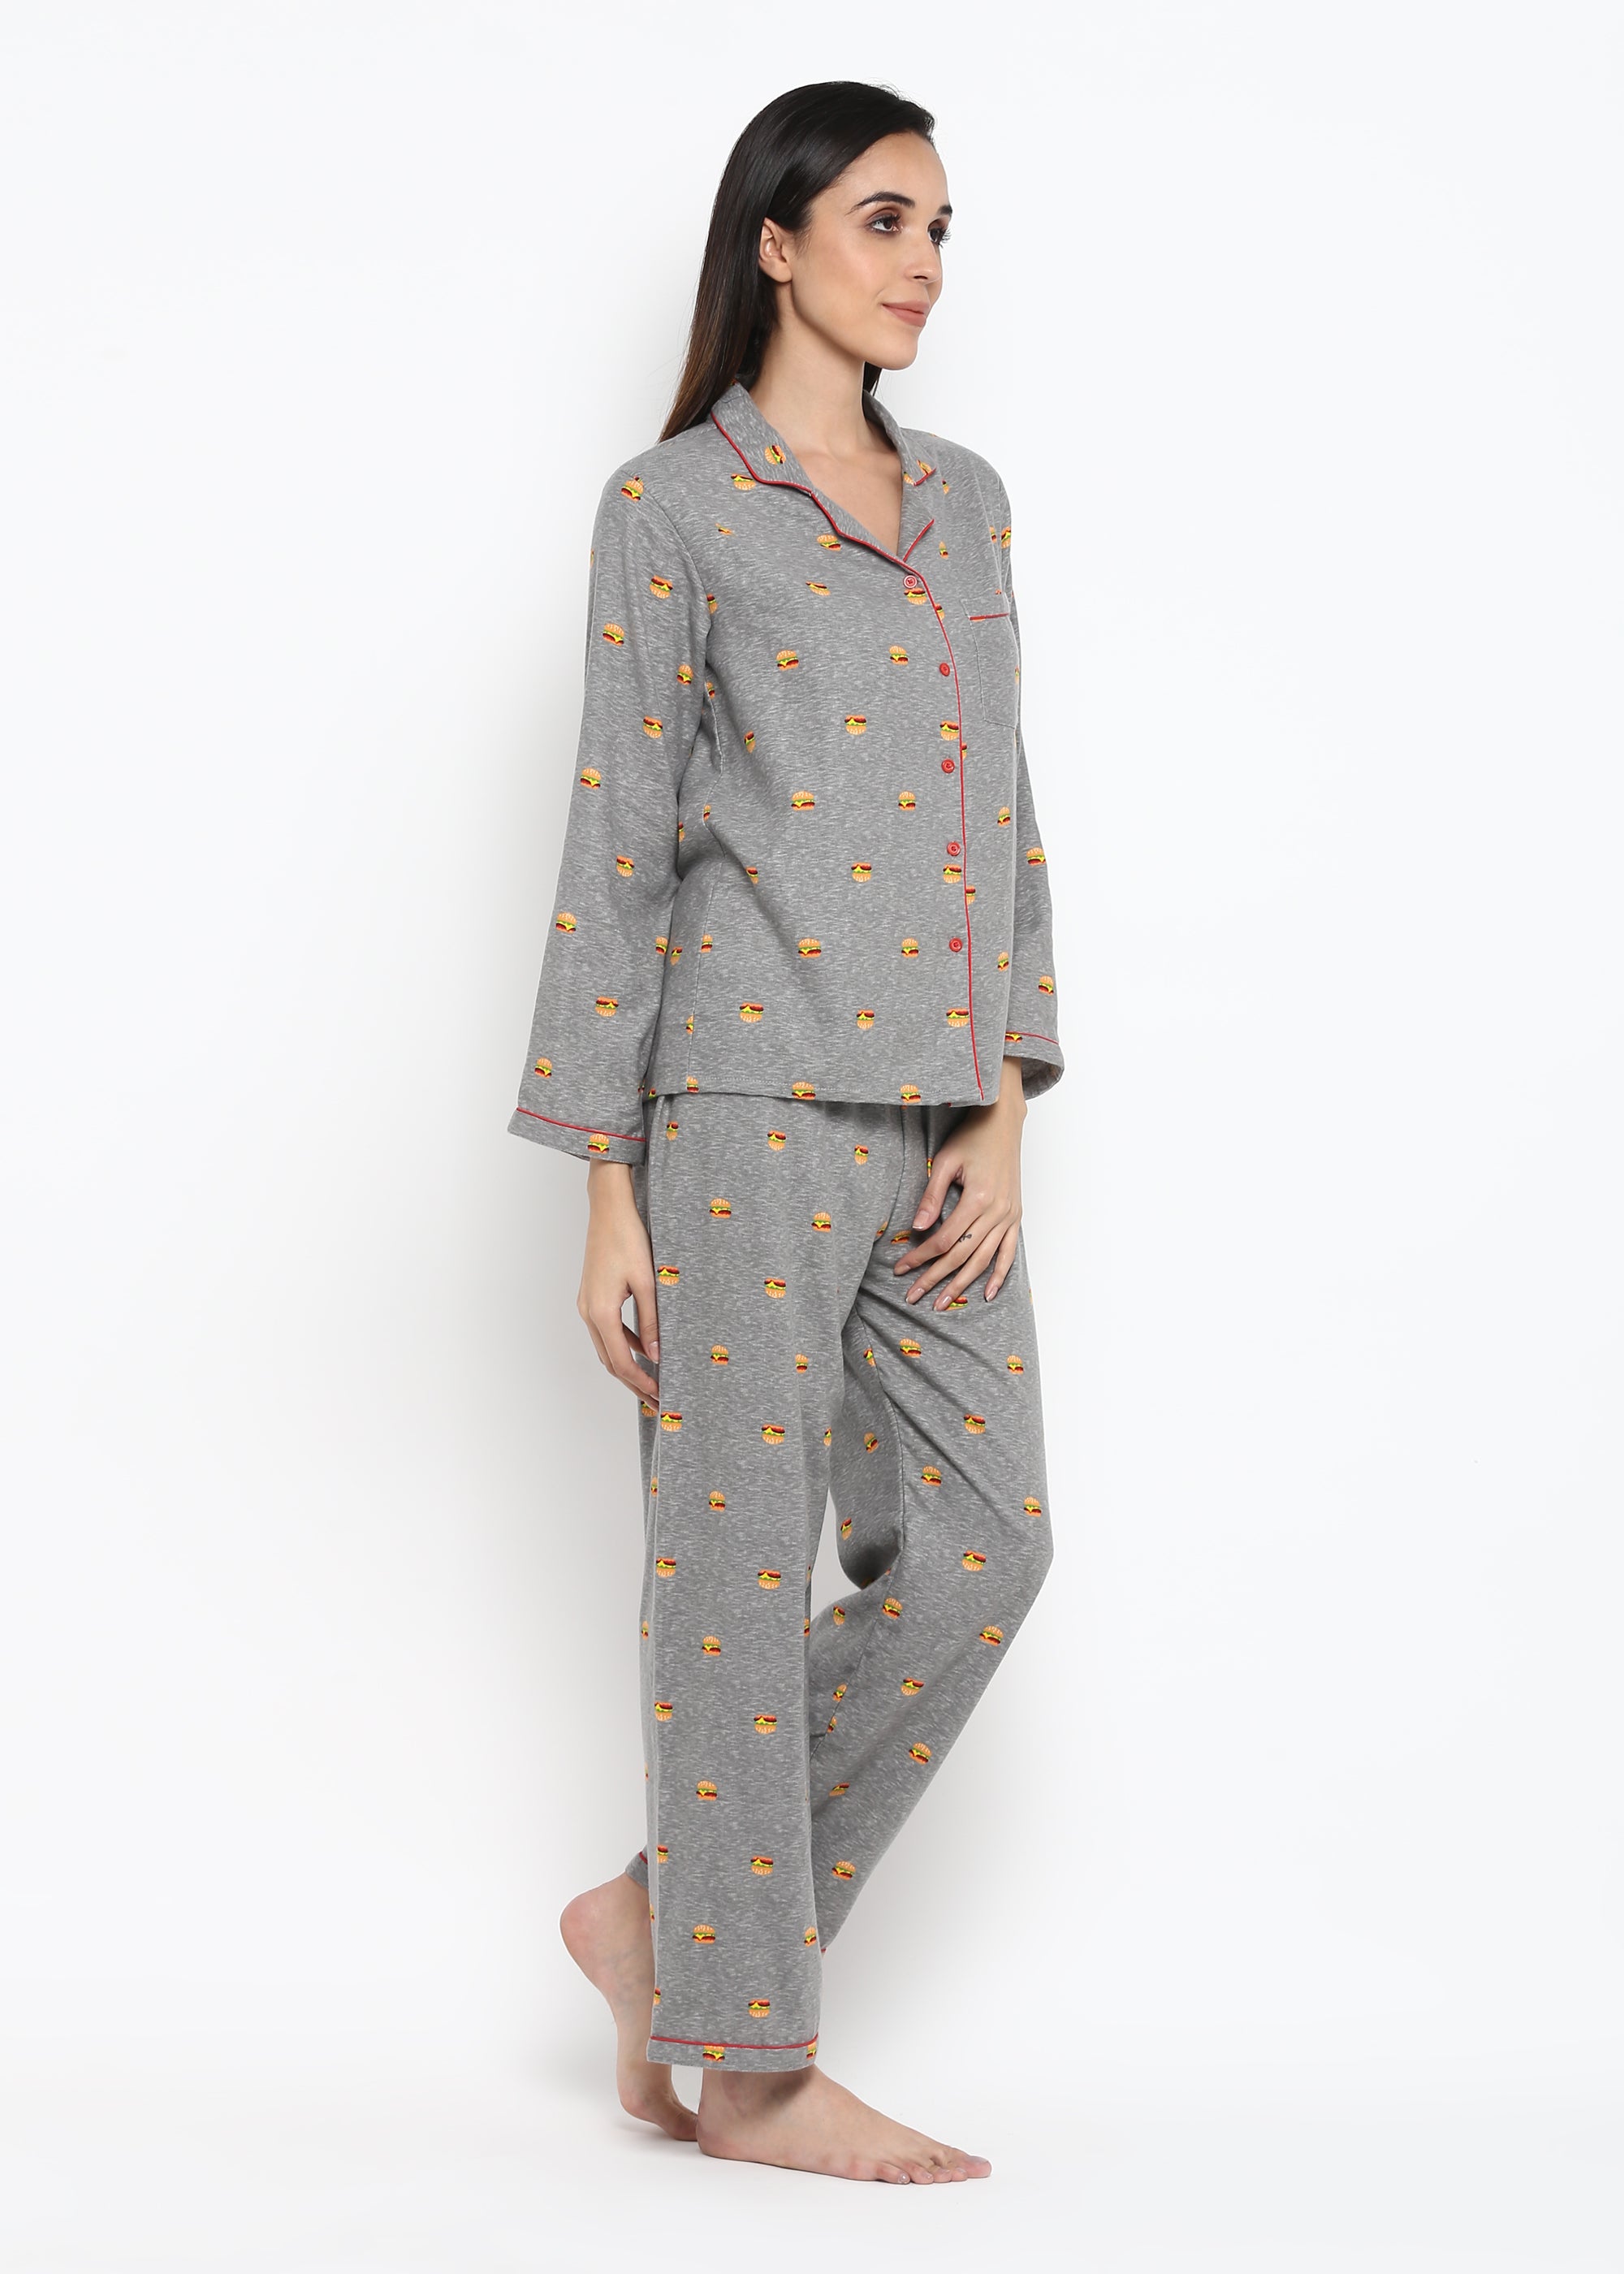 Burger Print Long Sleeve Women's Night Suit - Shopbloom